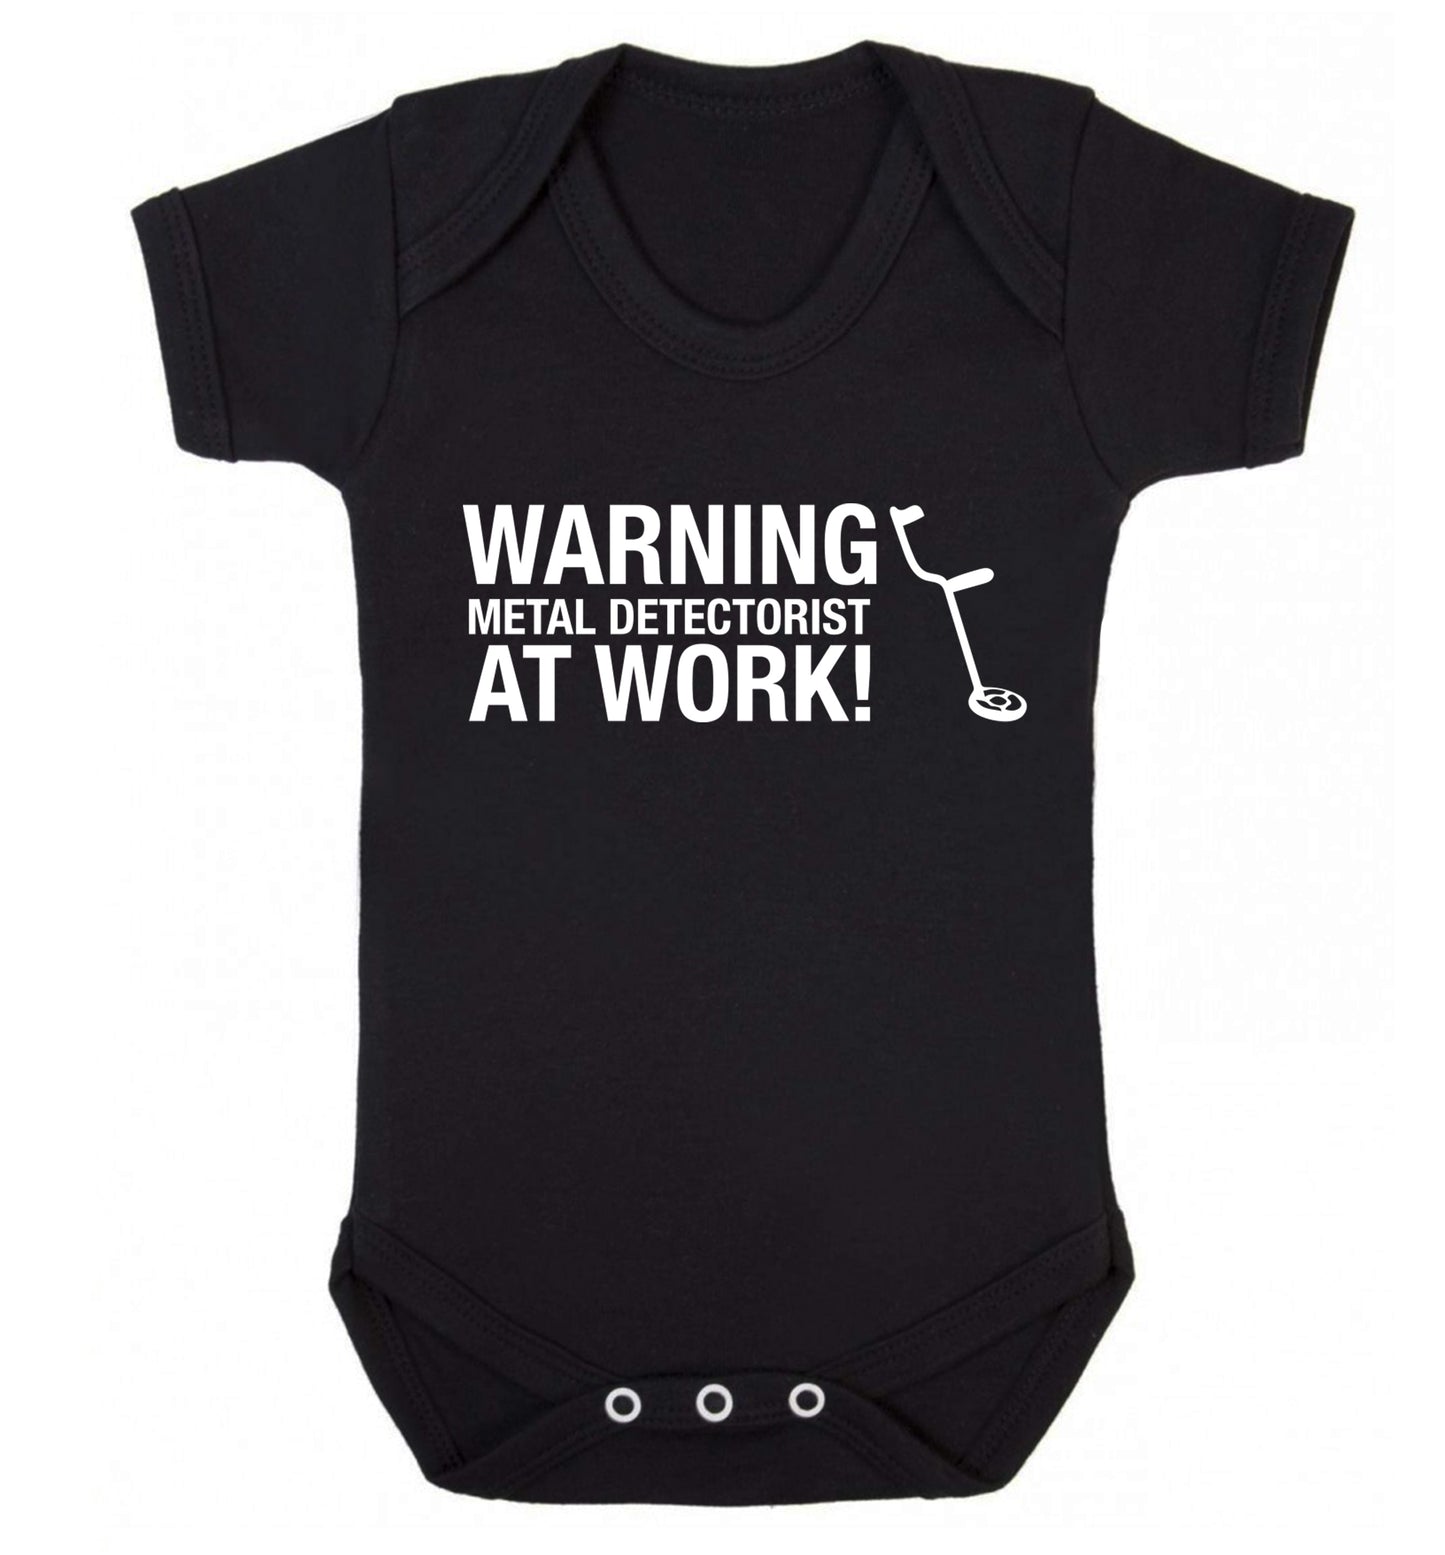 Warning metal detectorist at work! Baby Vest black 18-24 months